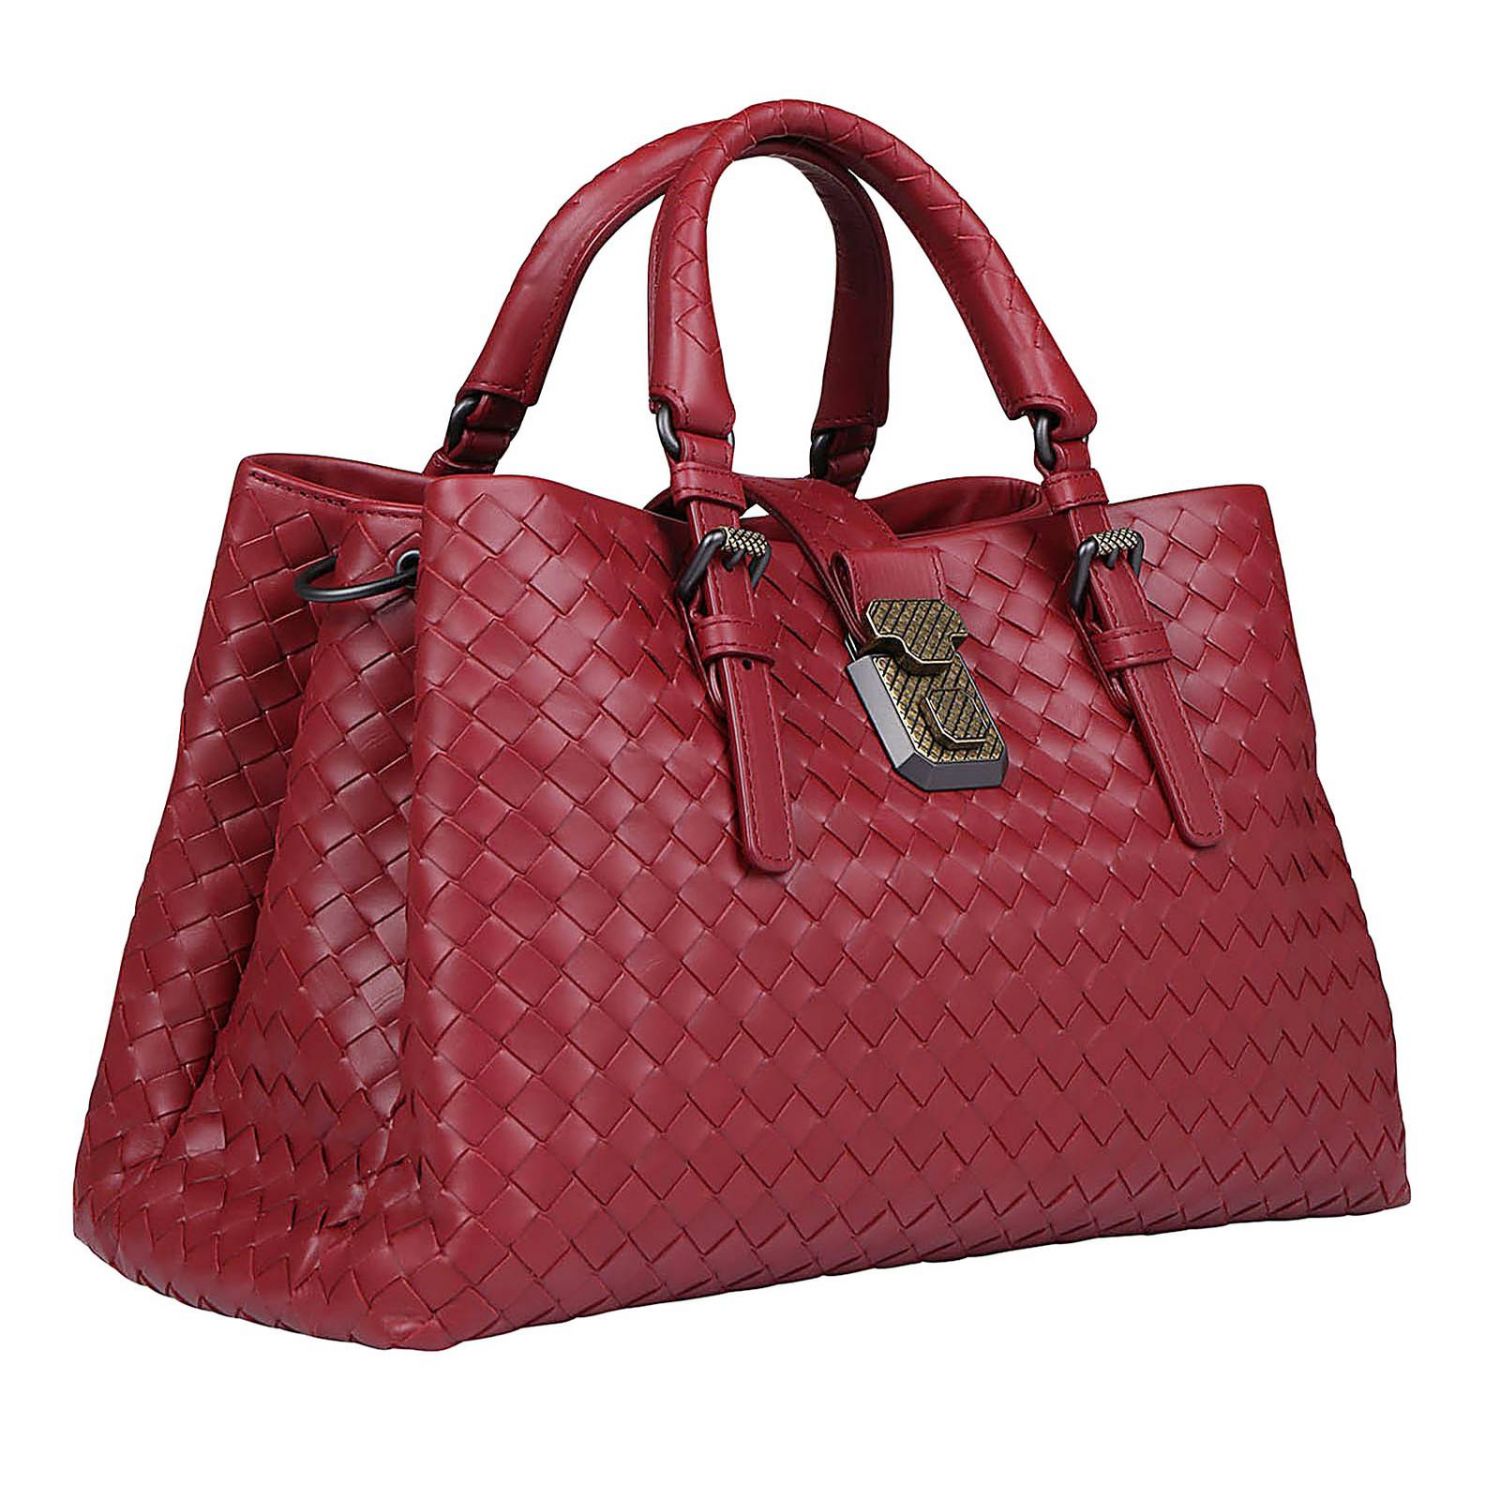 Bottega Veneta Outlet: Crossbody bags women | Crossbody Bags Bottega ...